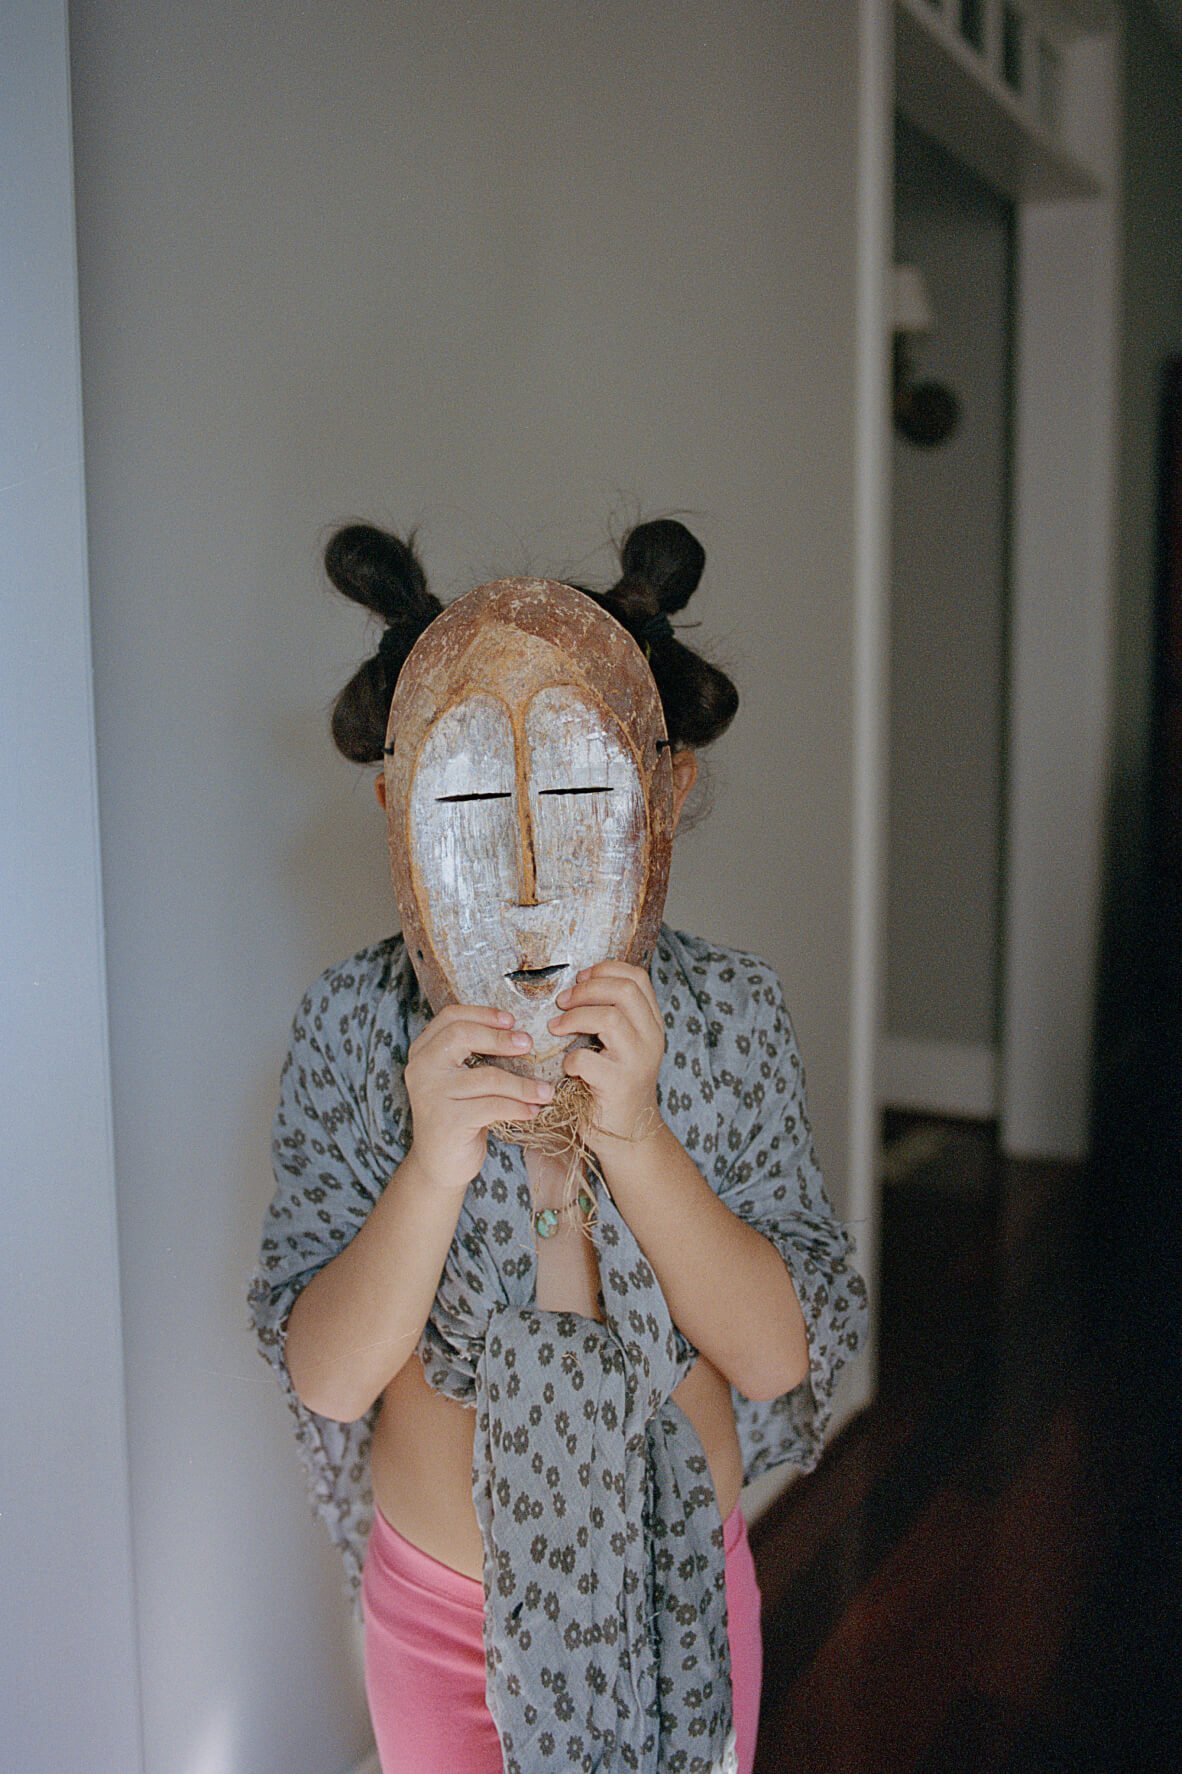 Garota segura uma máscara tradicional no rosto.